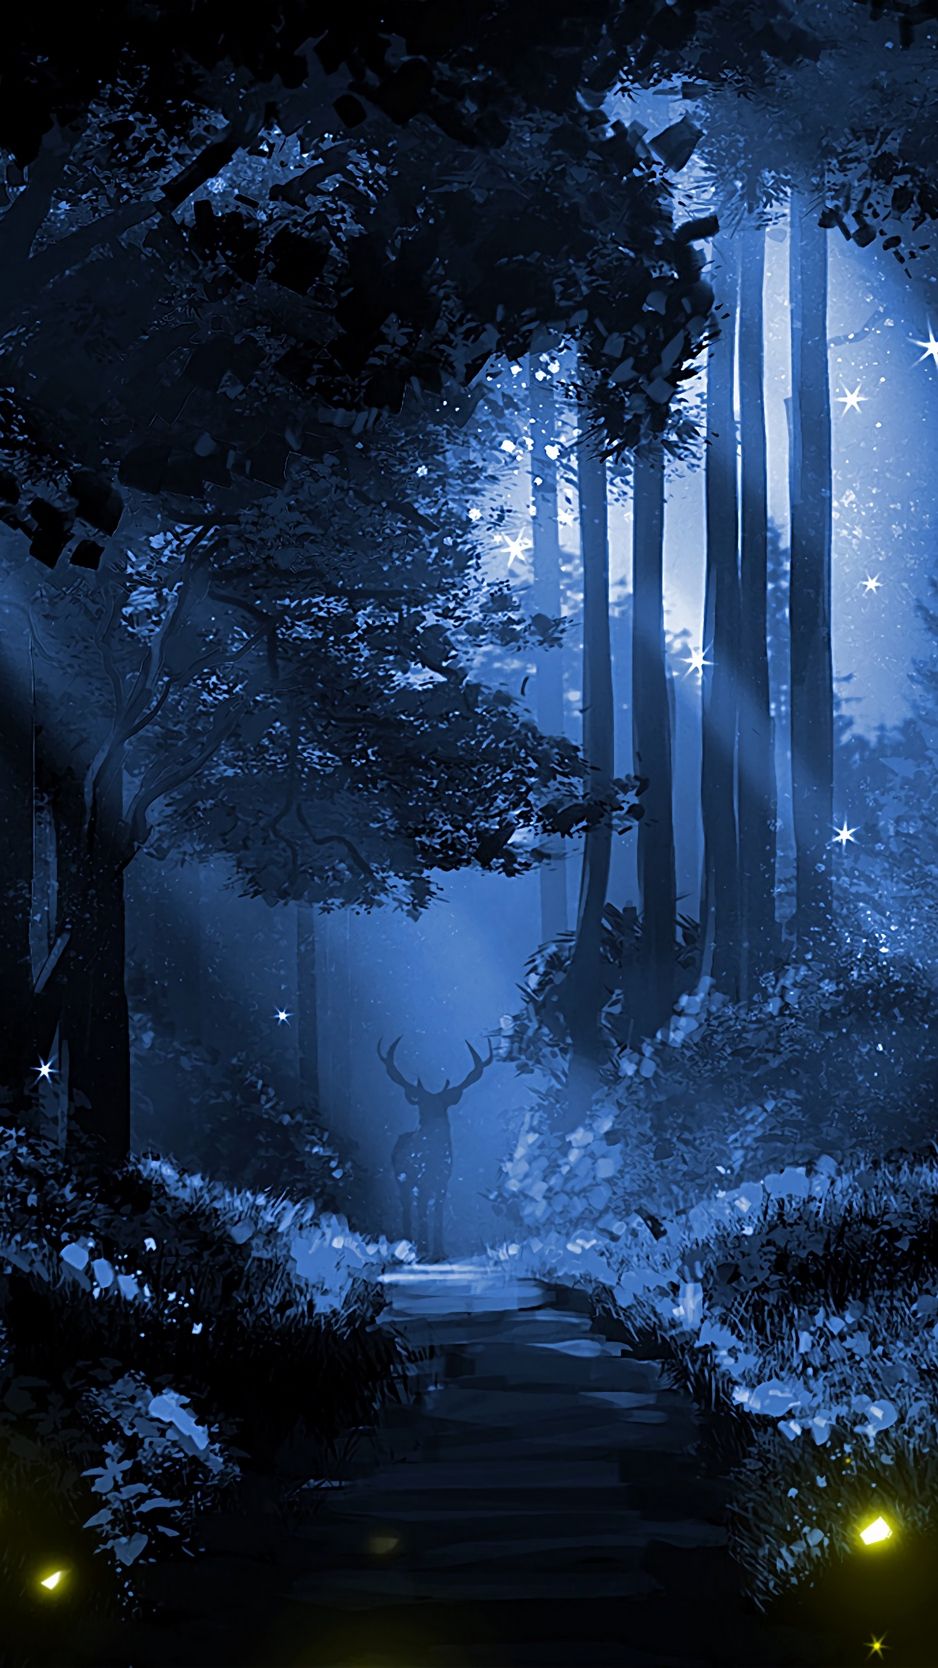 27+] Beautiful Night Forest Wallpapers - WallpaperSafari